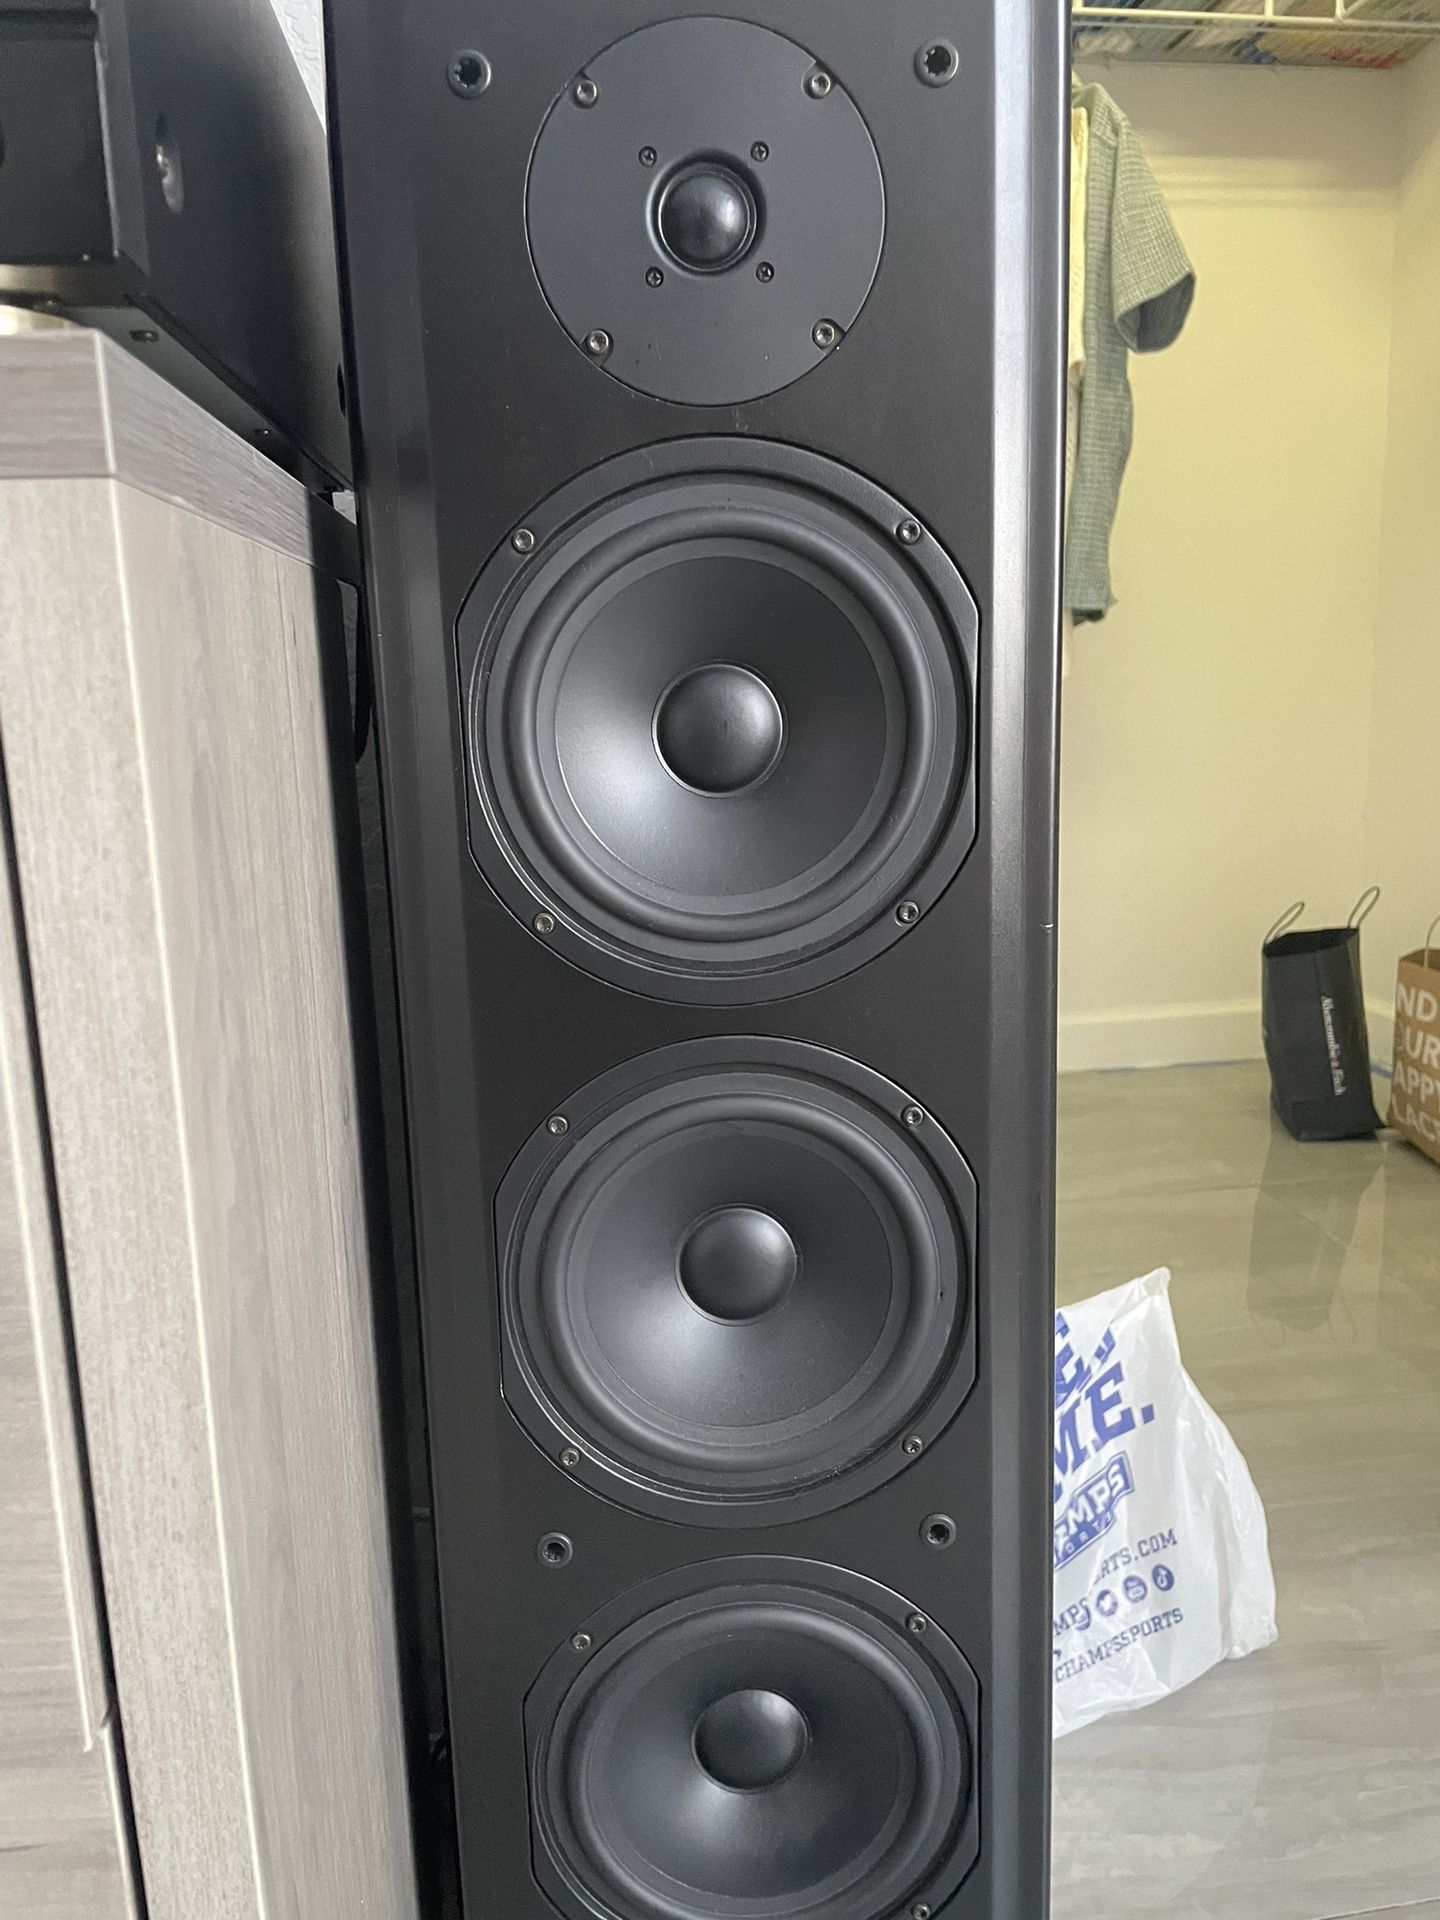 Elemental Designs A6-6T6 Tower Speakers